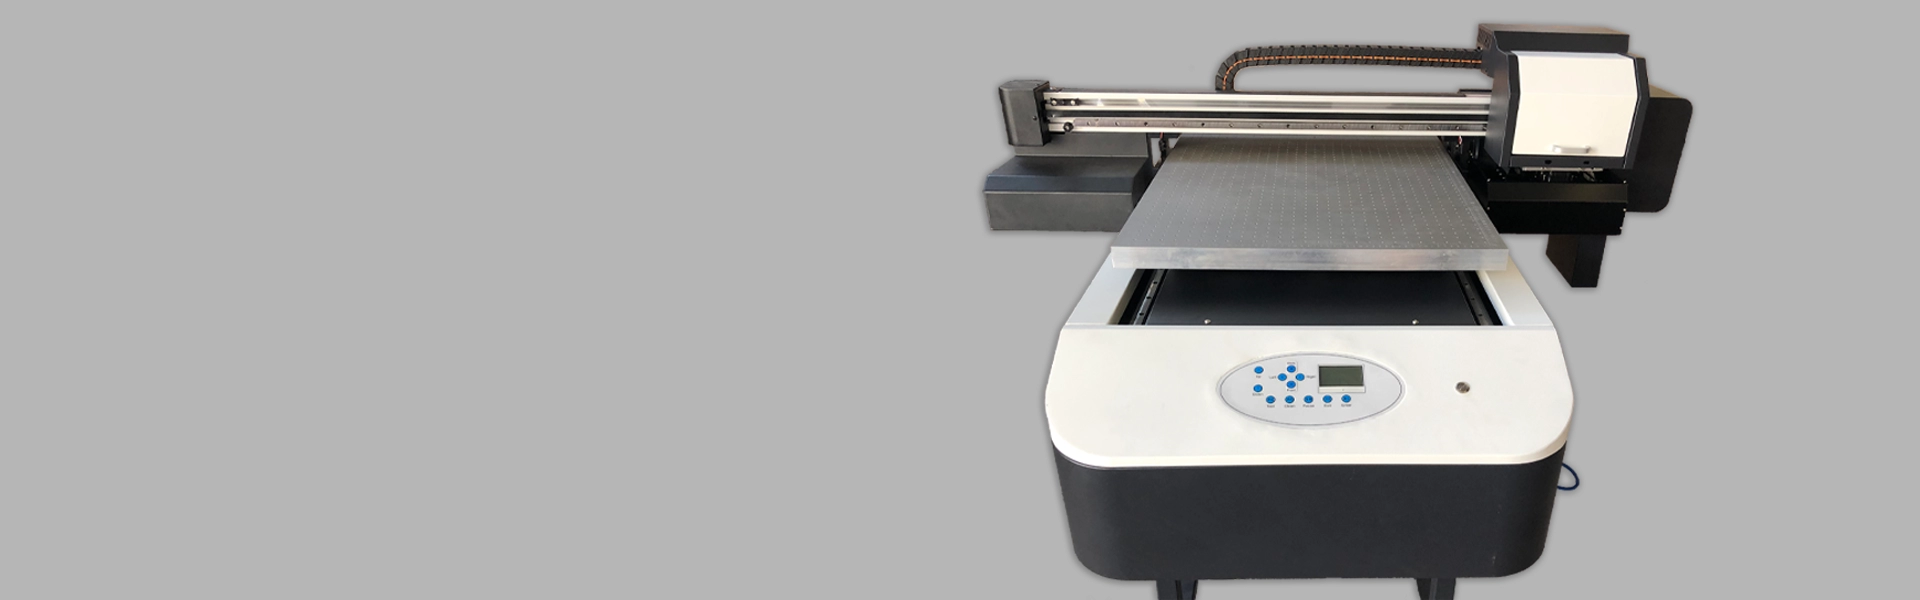 UV Flatbed Printer 6090